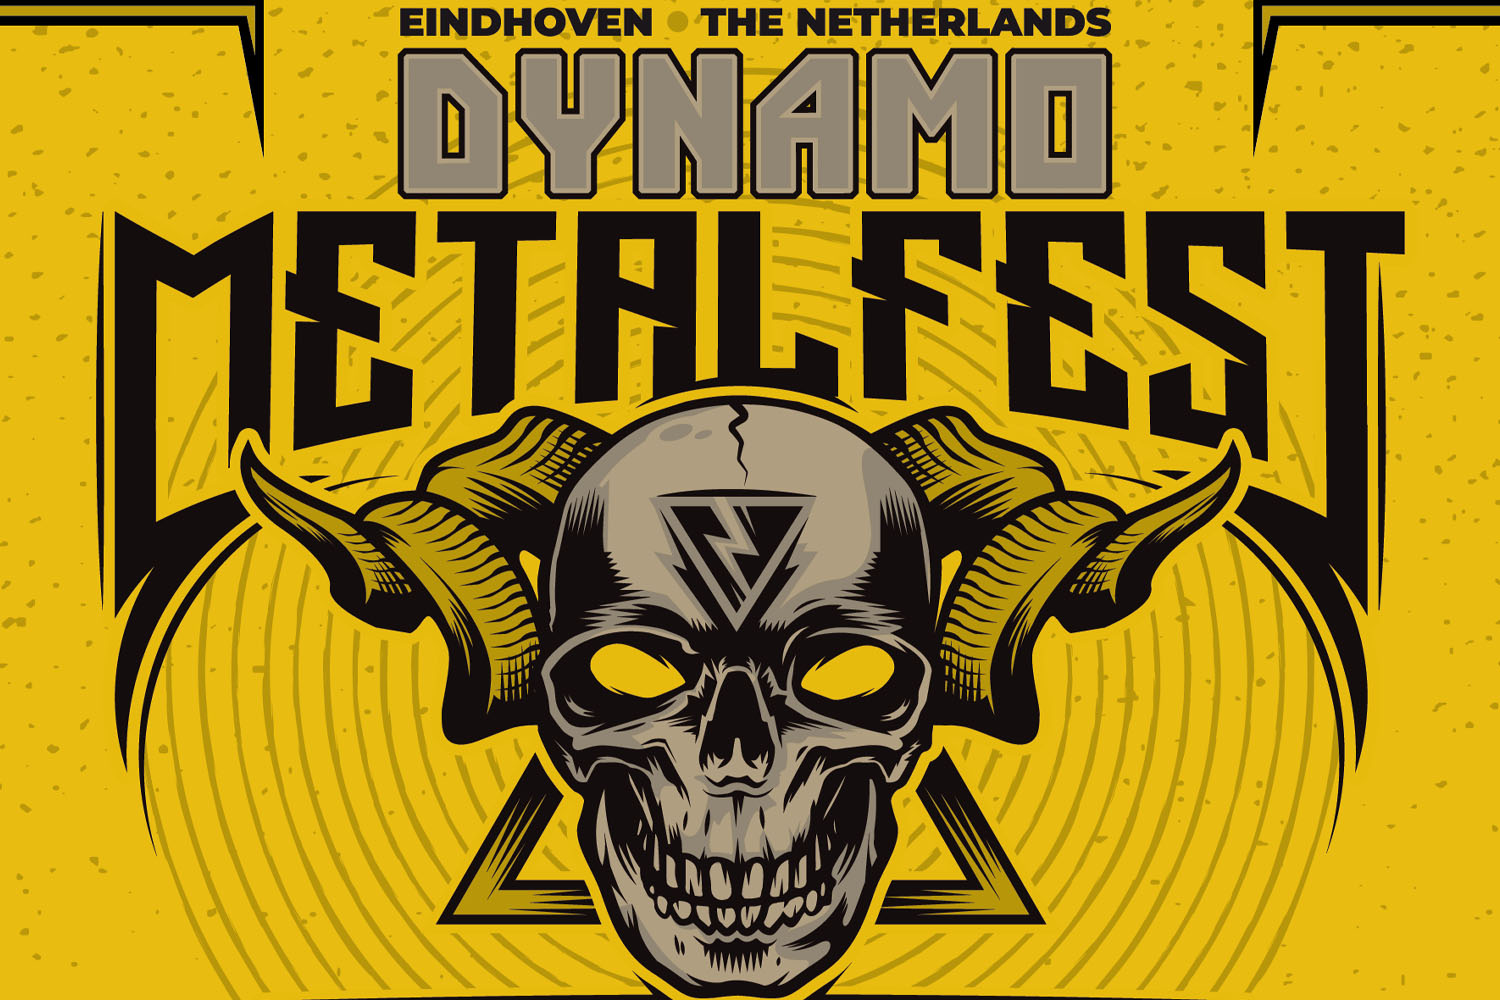 Dynamo Metalfest